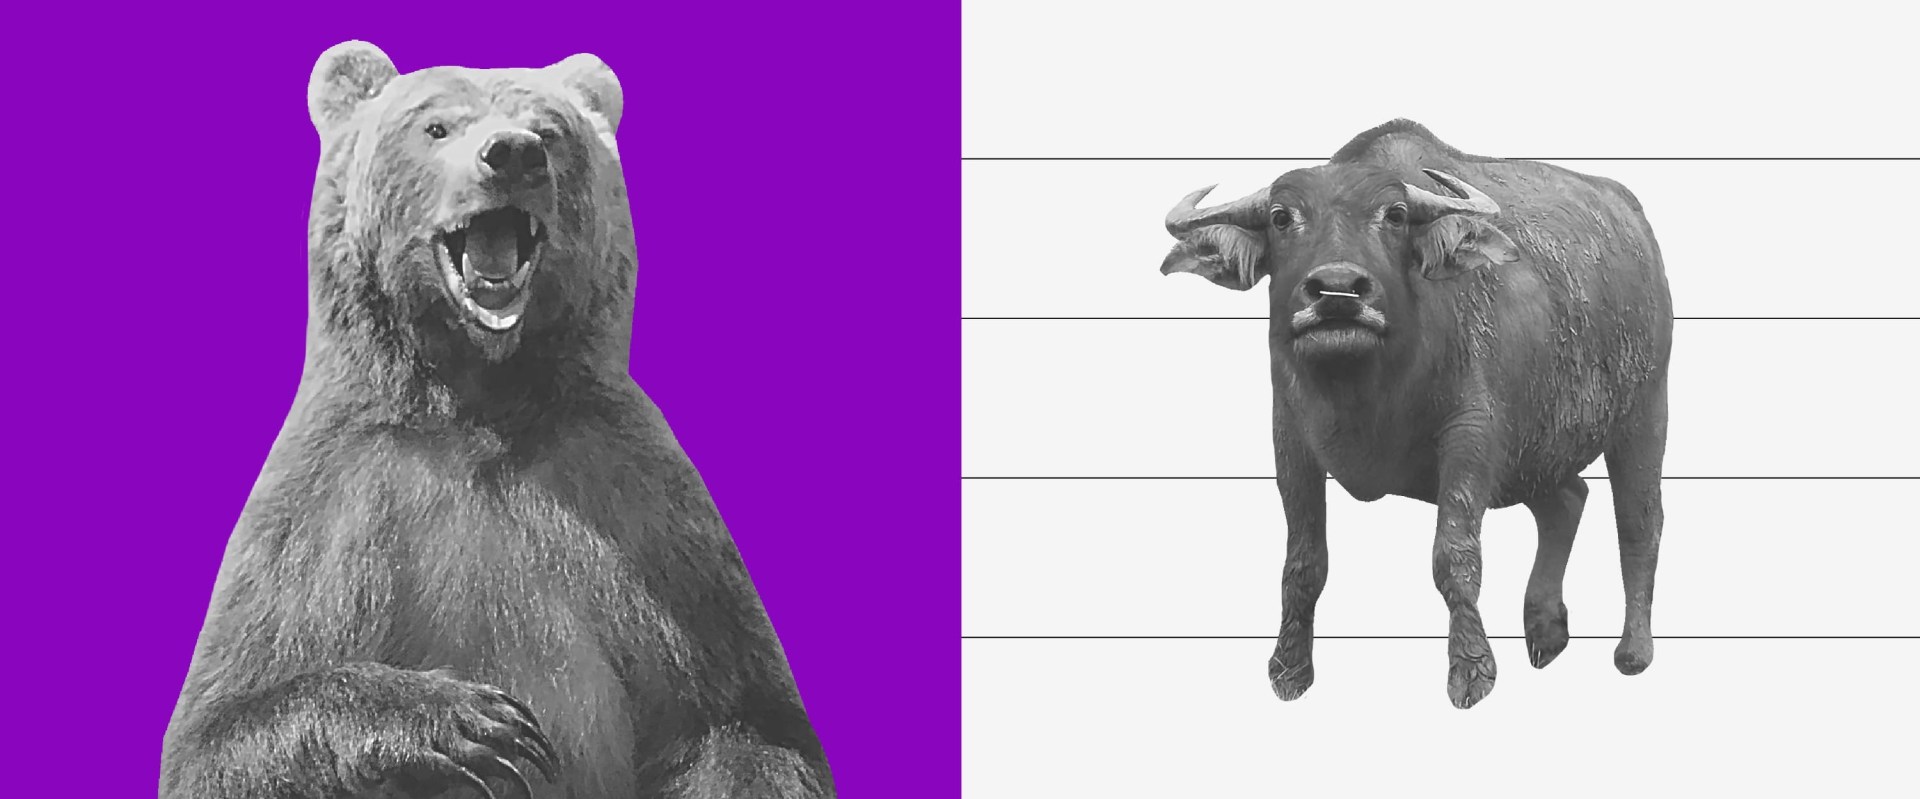 https://backend.blog.nubank.com.br/wp-content/uploads/2020/09/bull-vs-bear_header.jpg?quality=100&w=1024